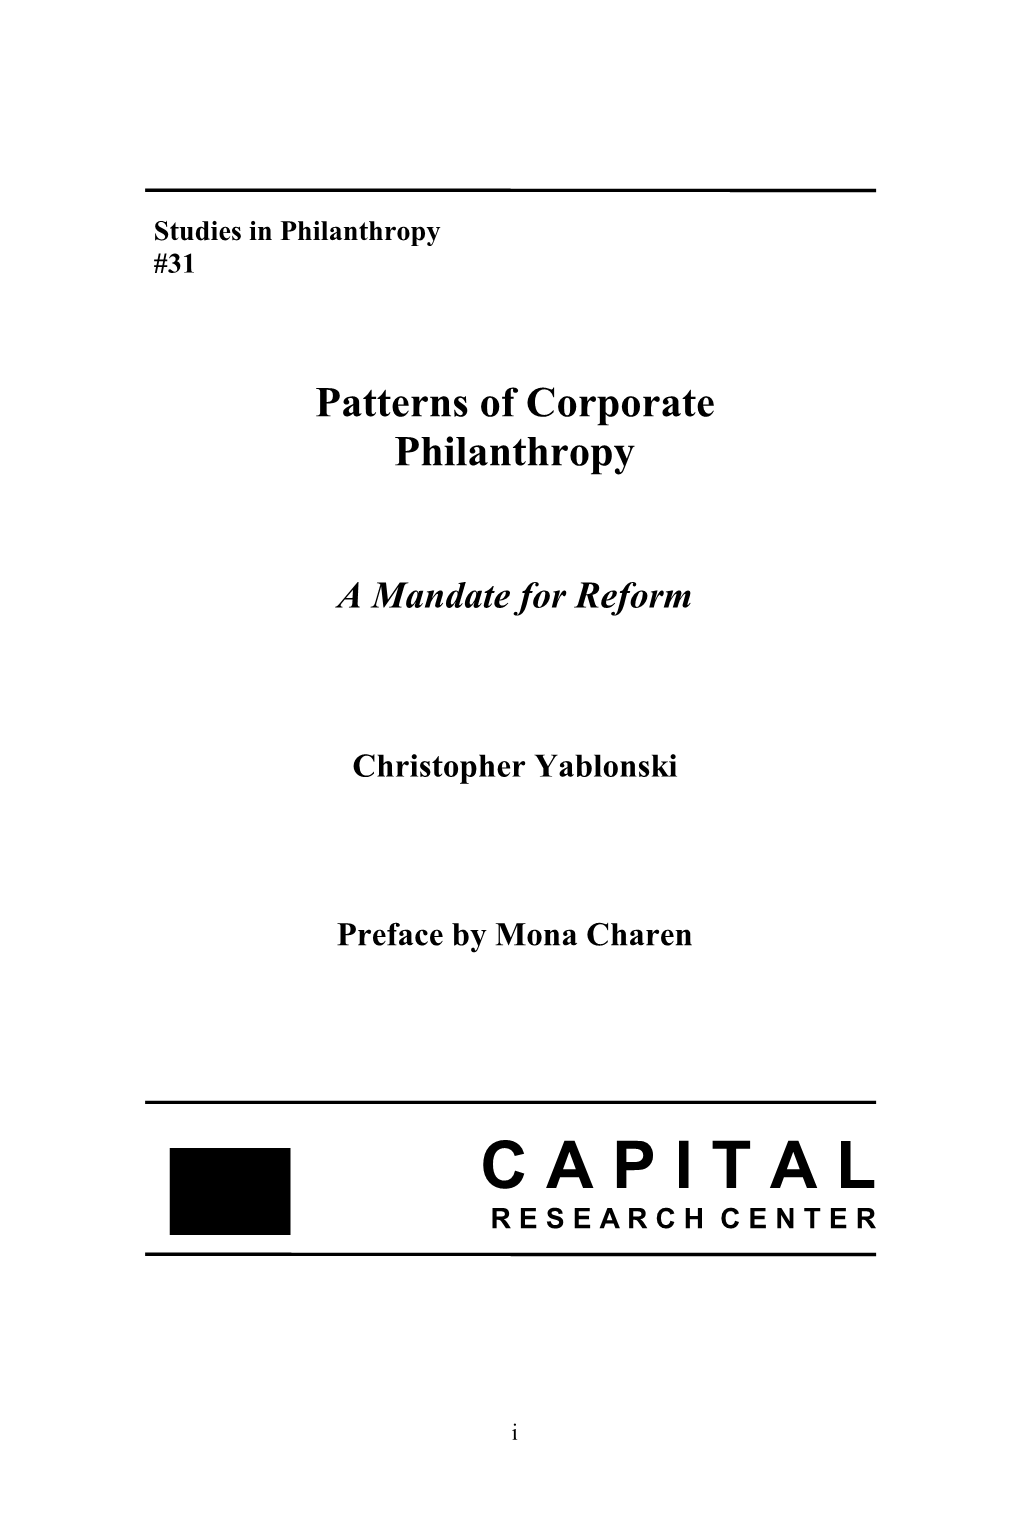 Patterns of Corporate Philanthropy